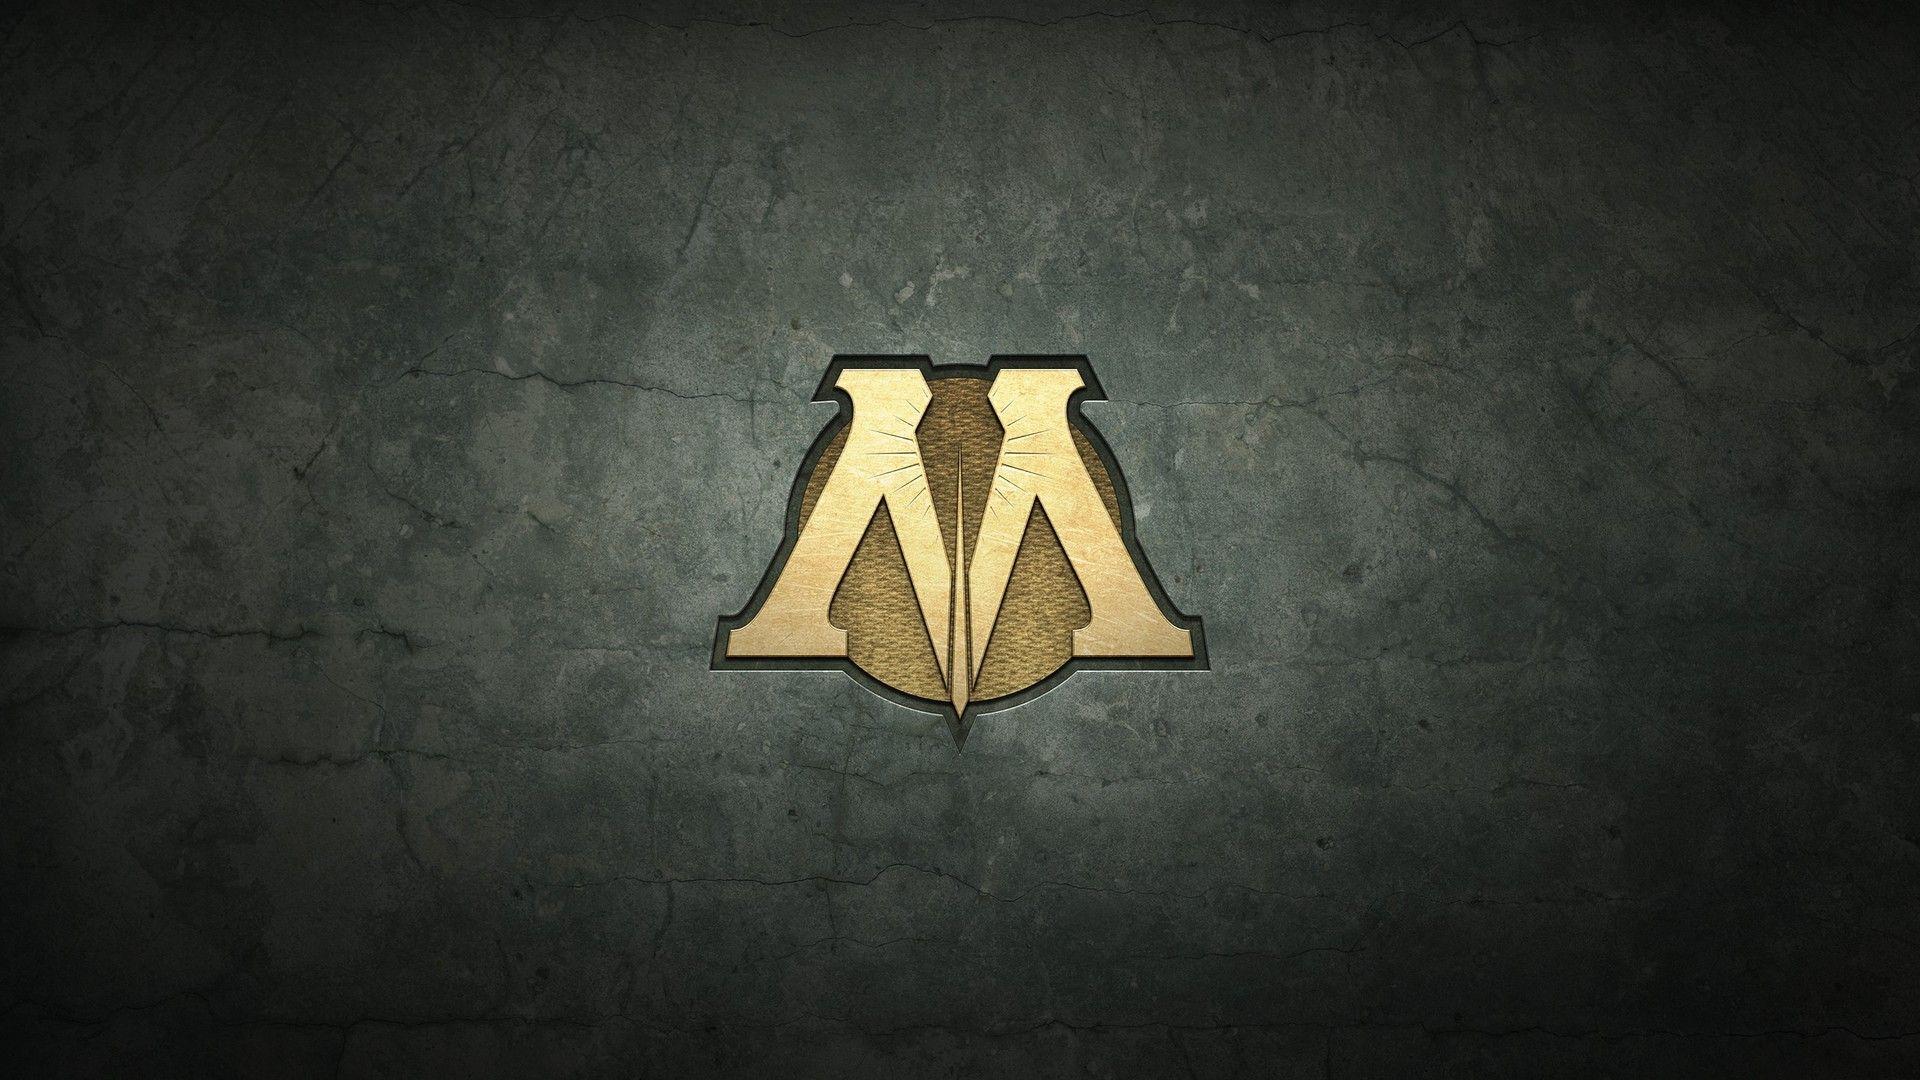 Harry Potter Movie Logo - Harry Potter Logos Quiz - By chxrlotte10